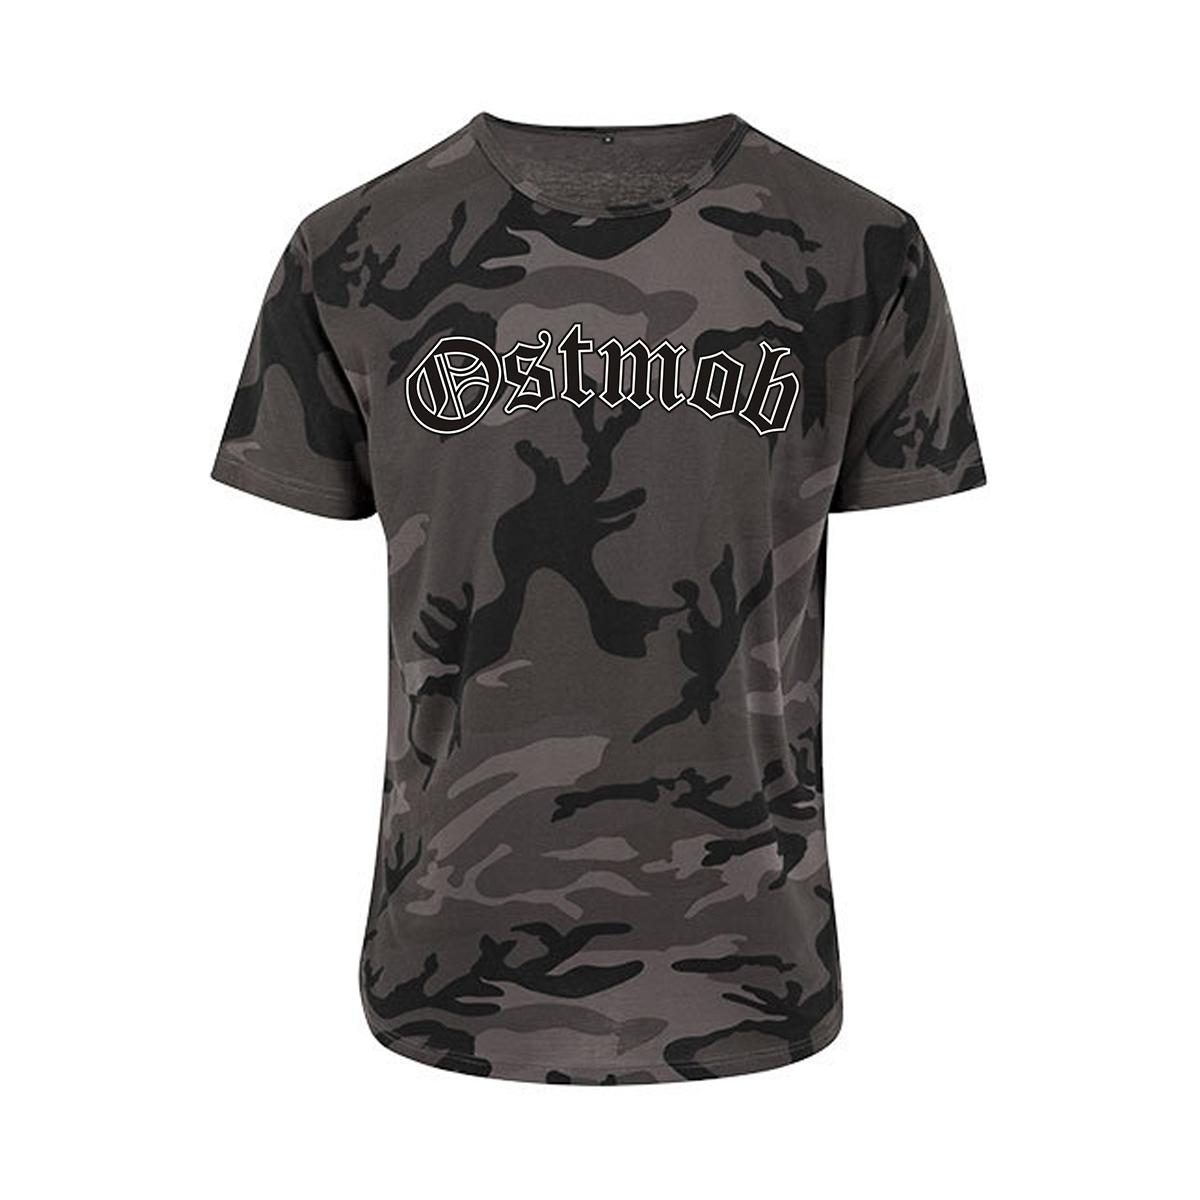 Ostmob - Männer T-Shirt - darkcamo